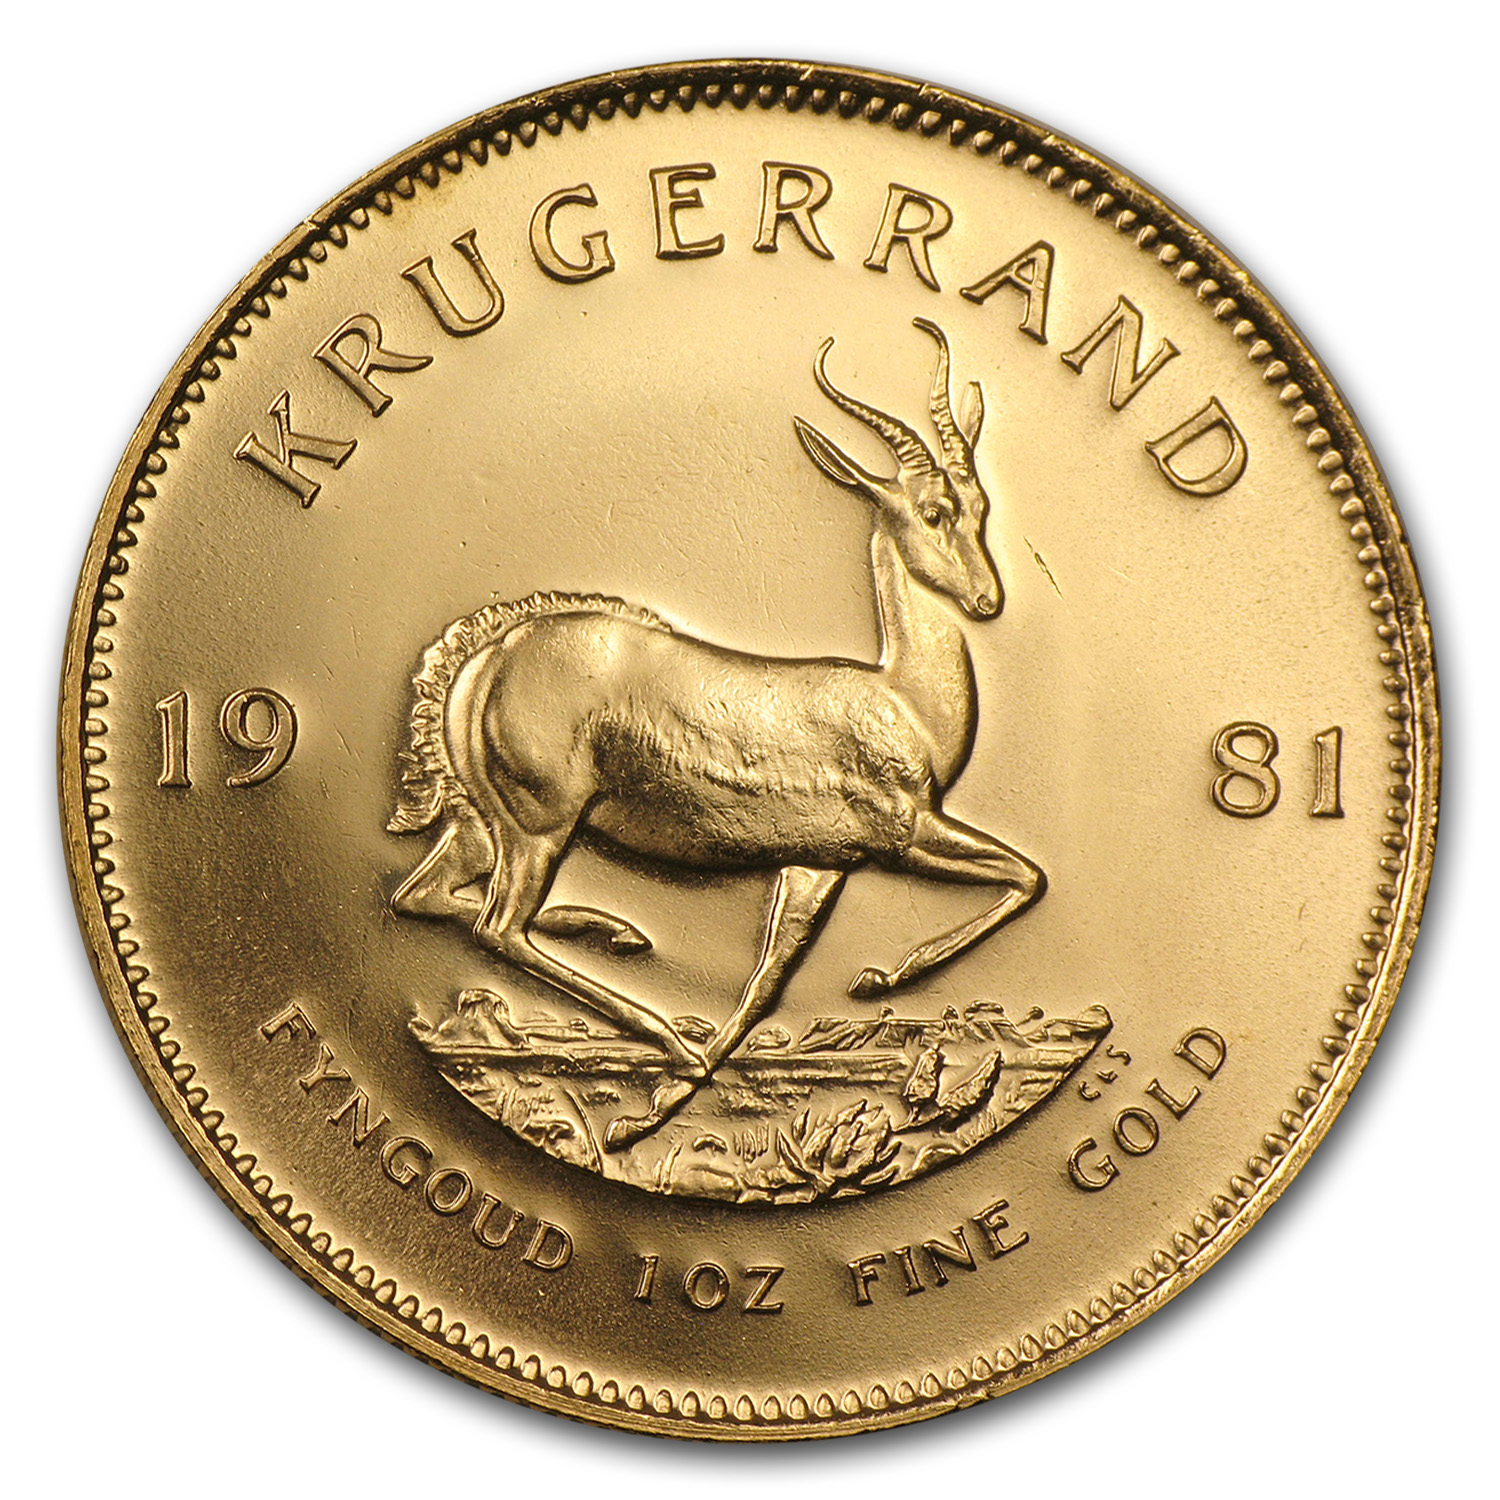 Buy 1981 South Africa 1 oz Gold Krugerrand BU | APMEX